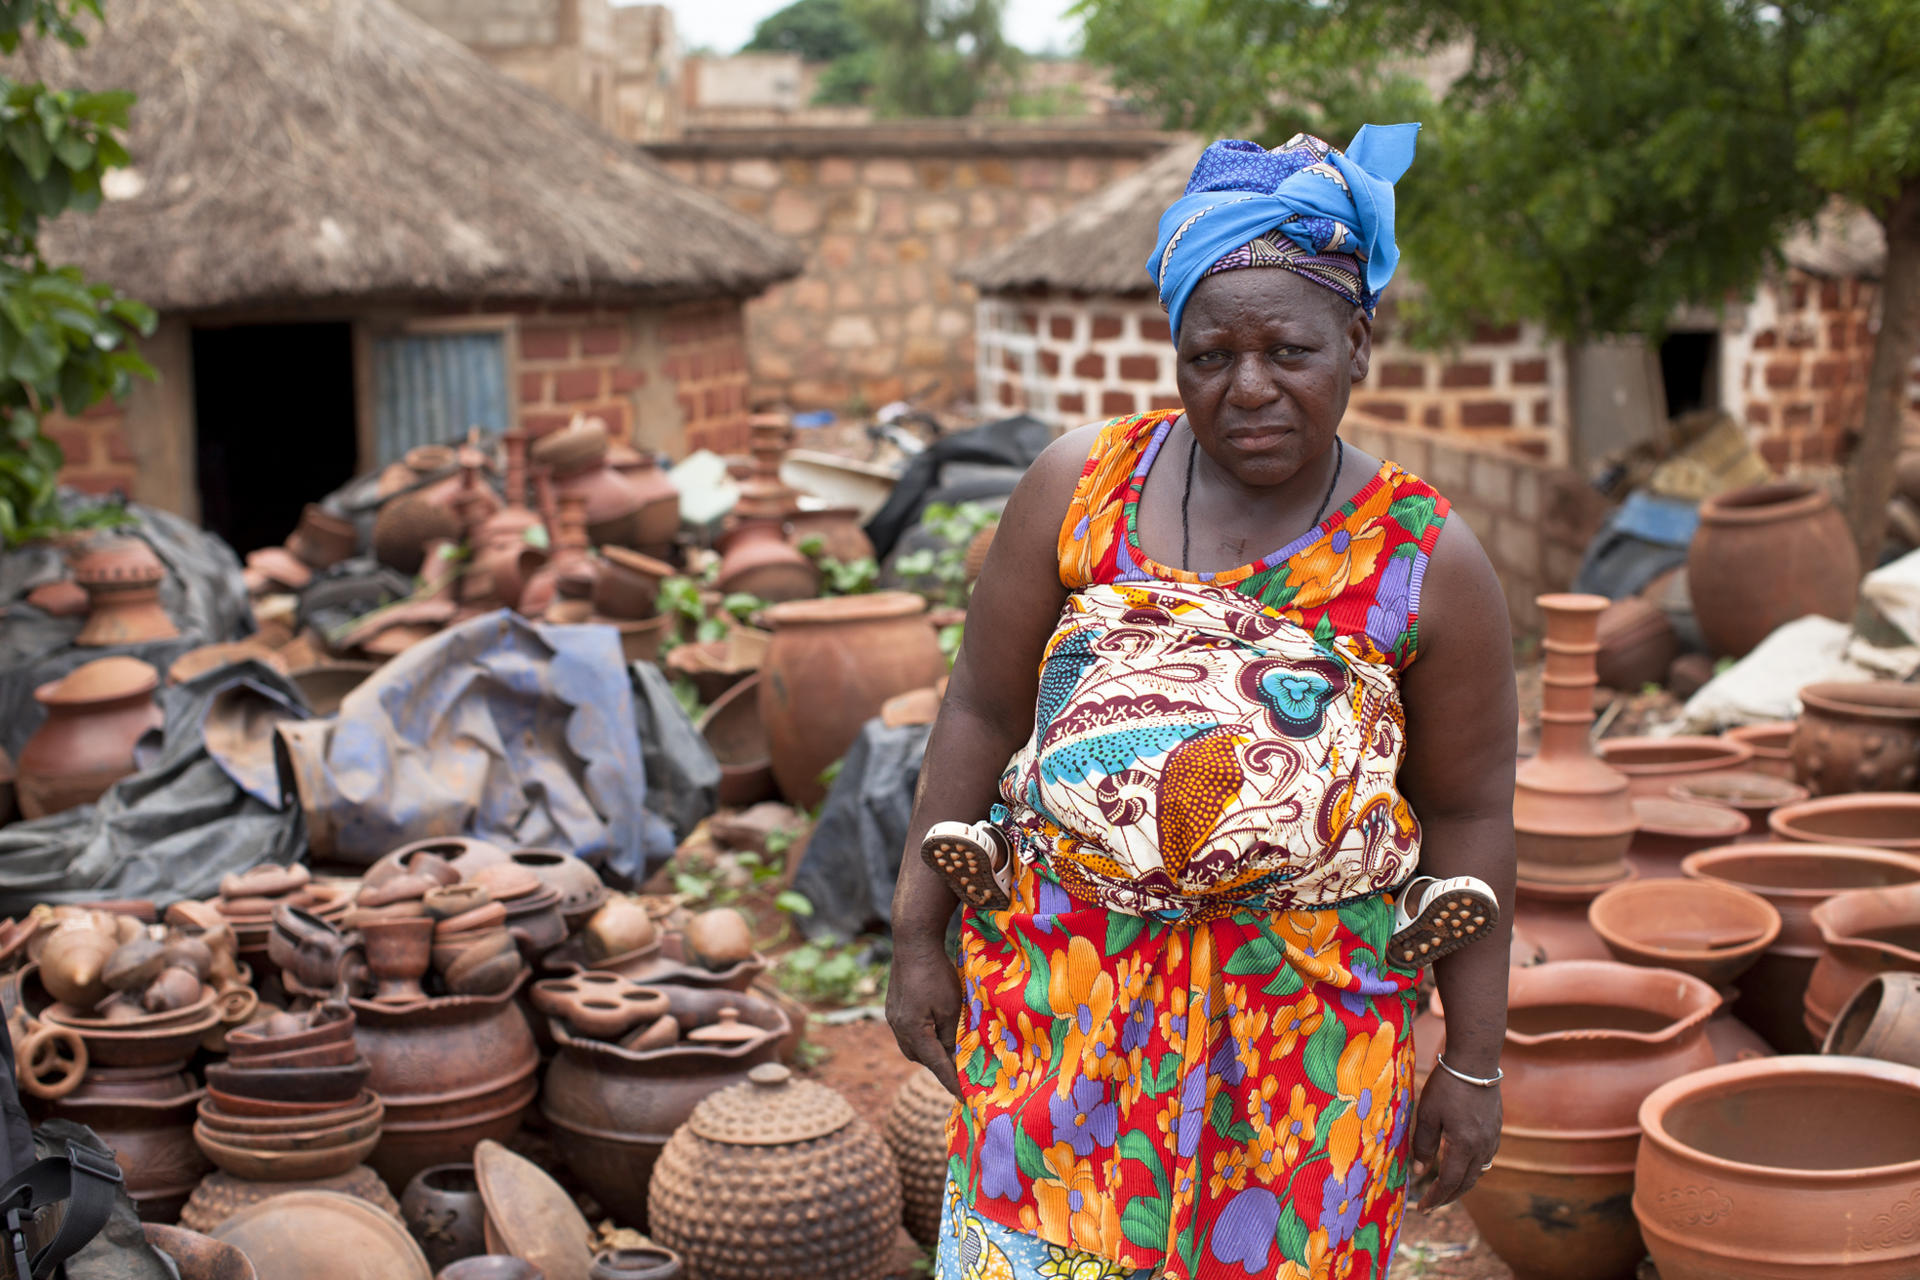 Gundara - pottery - clay bowls - handmade in Burkina Faso - fair trade